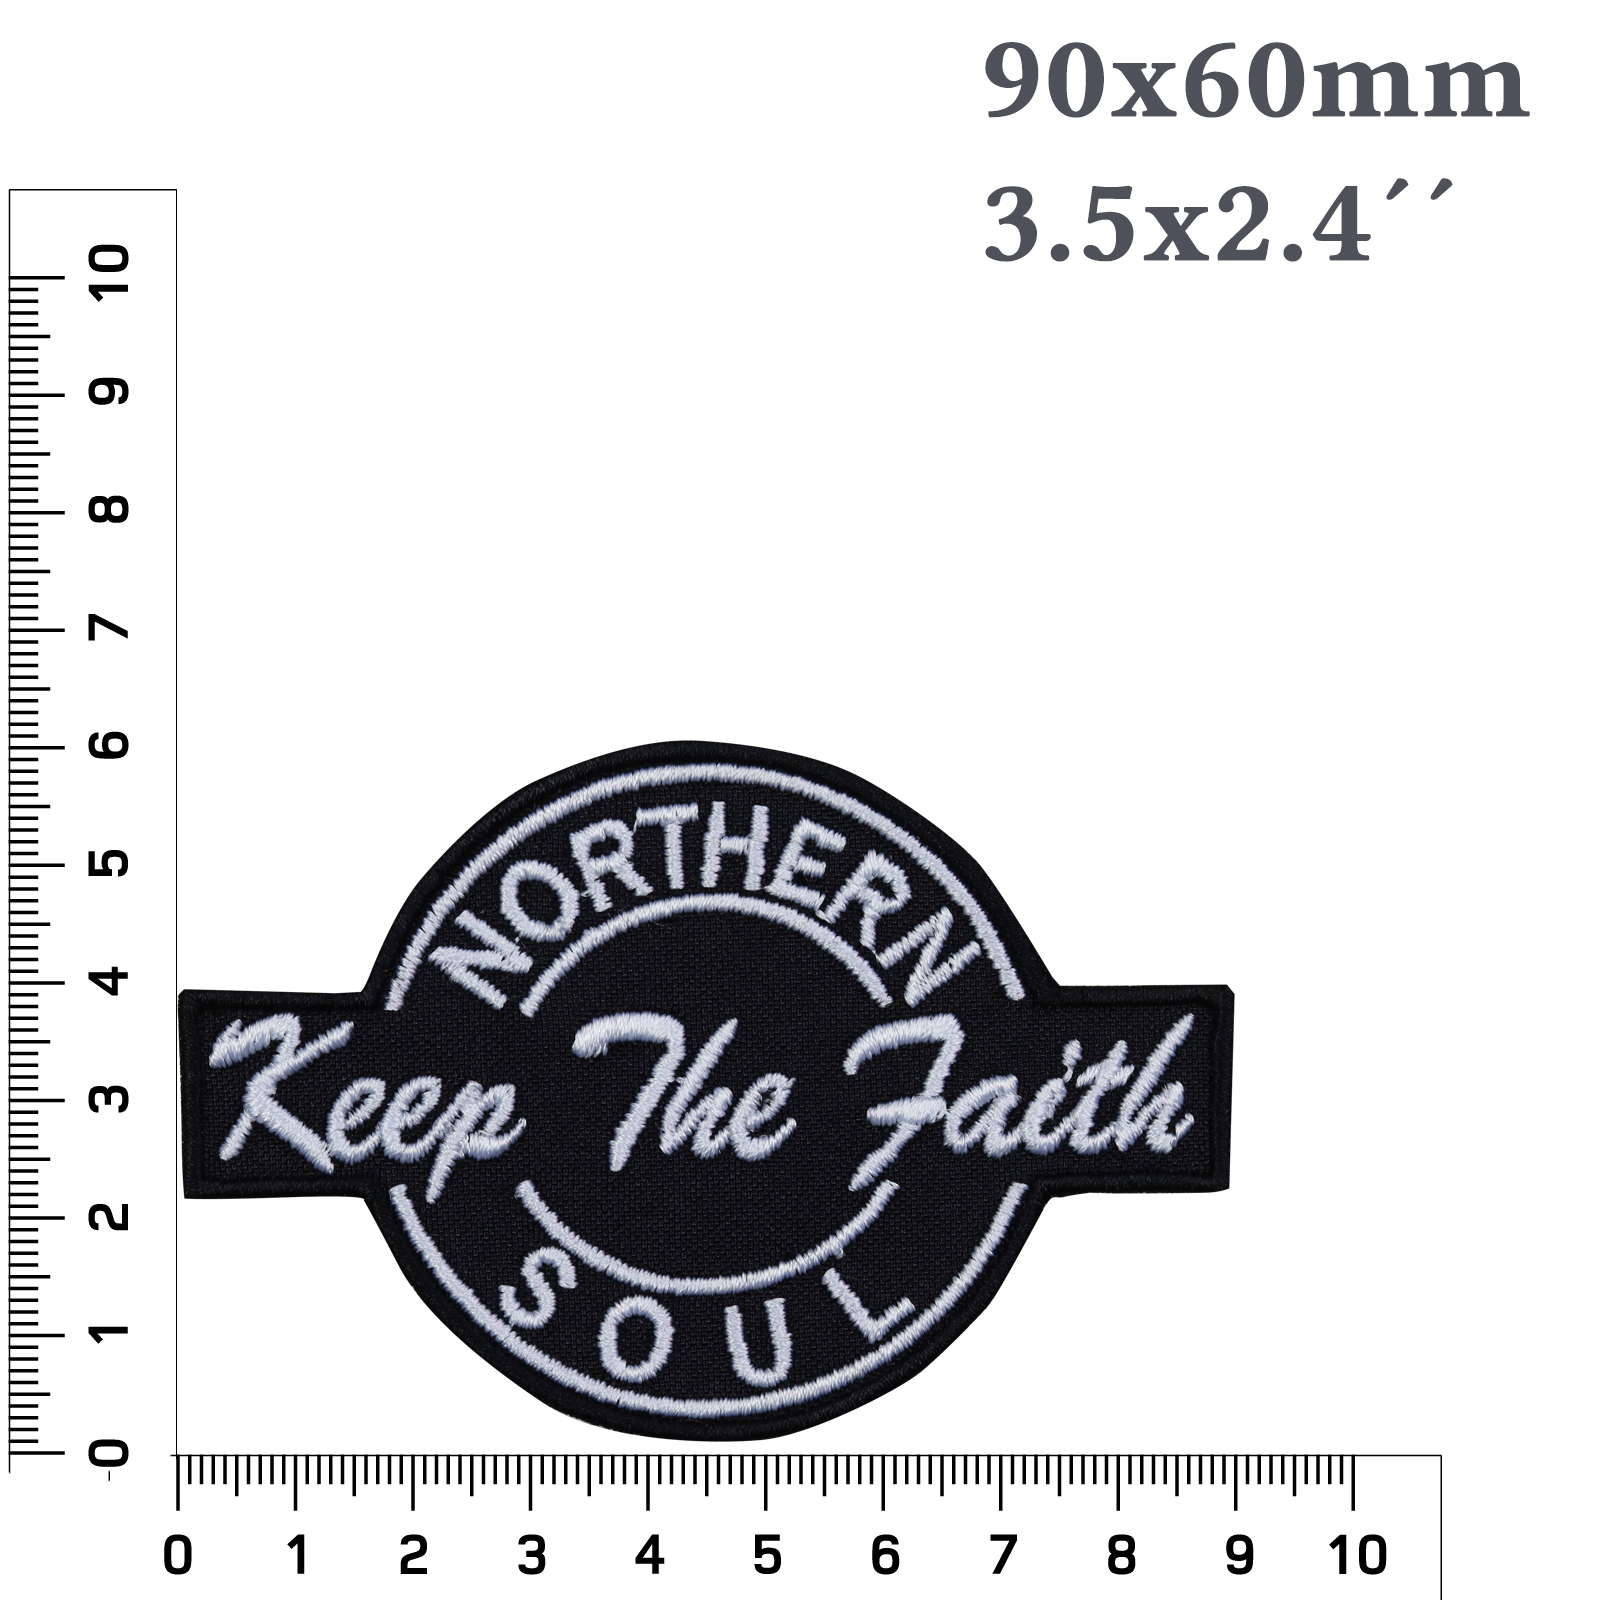 Keep the faith - Northern Soul - Patch